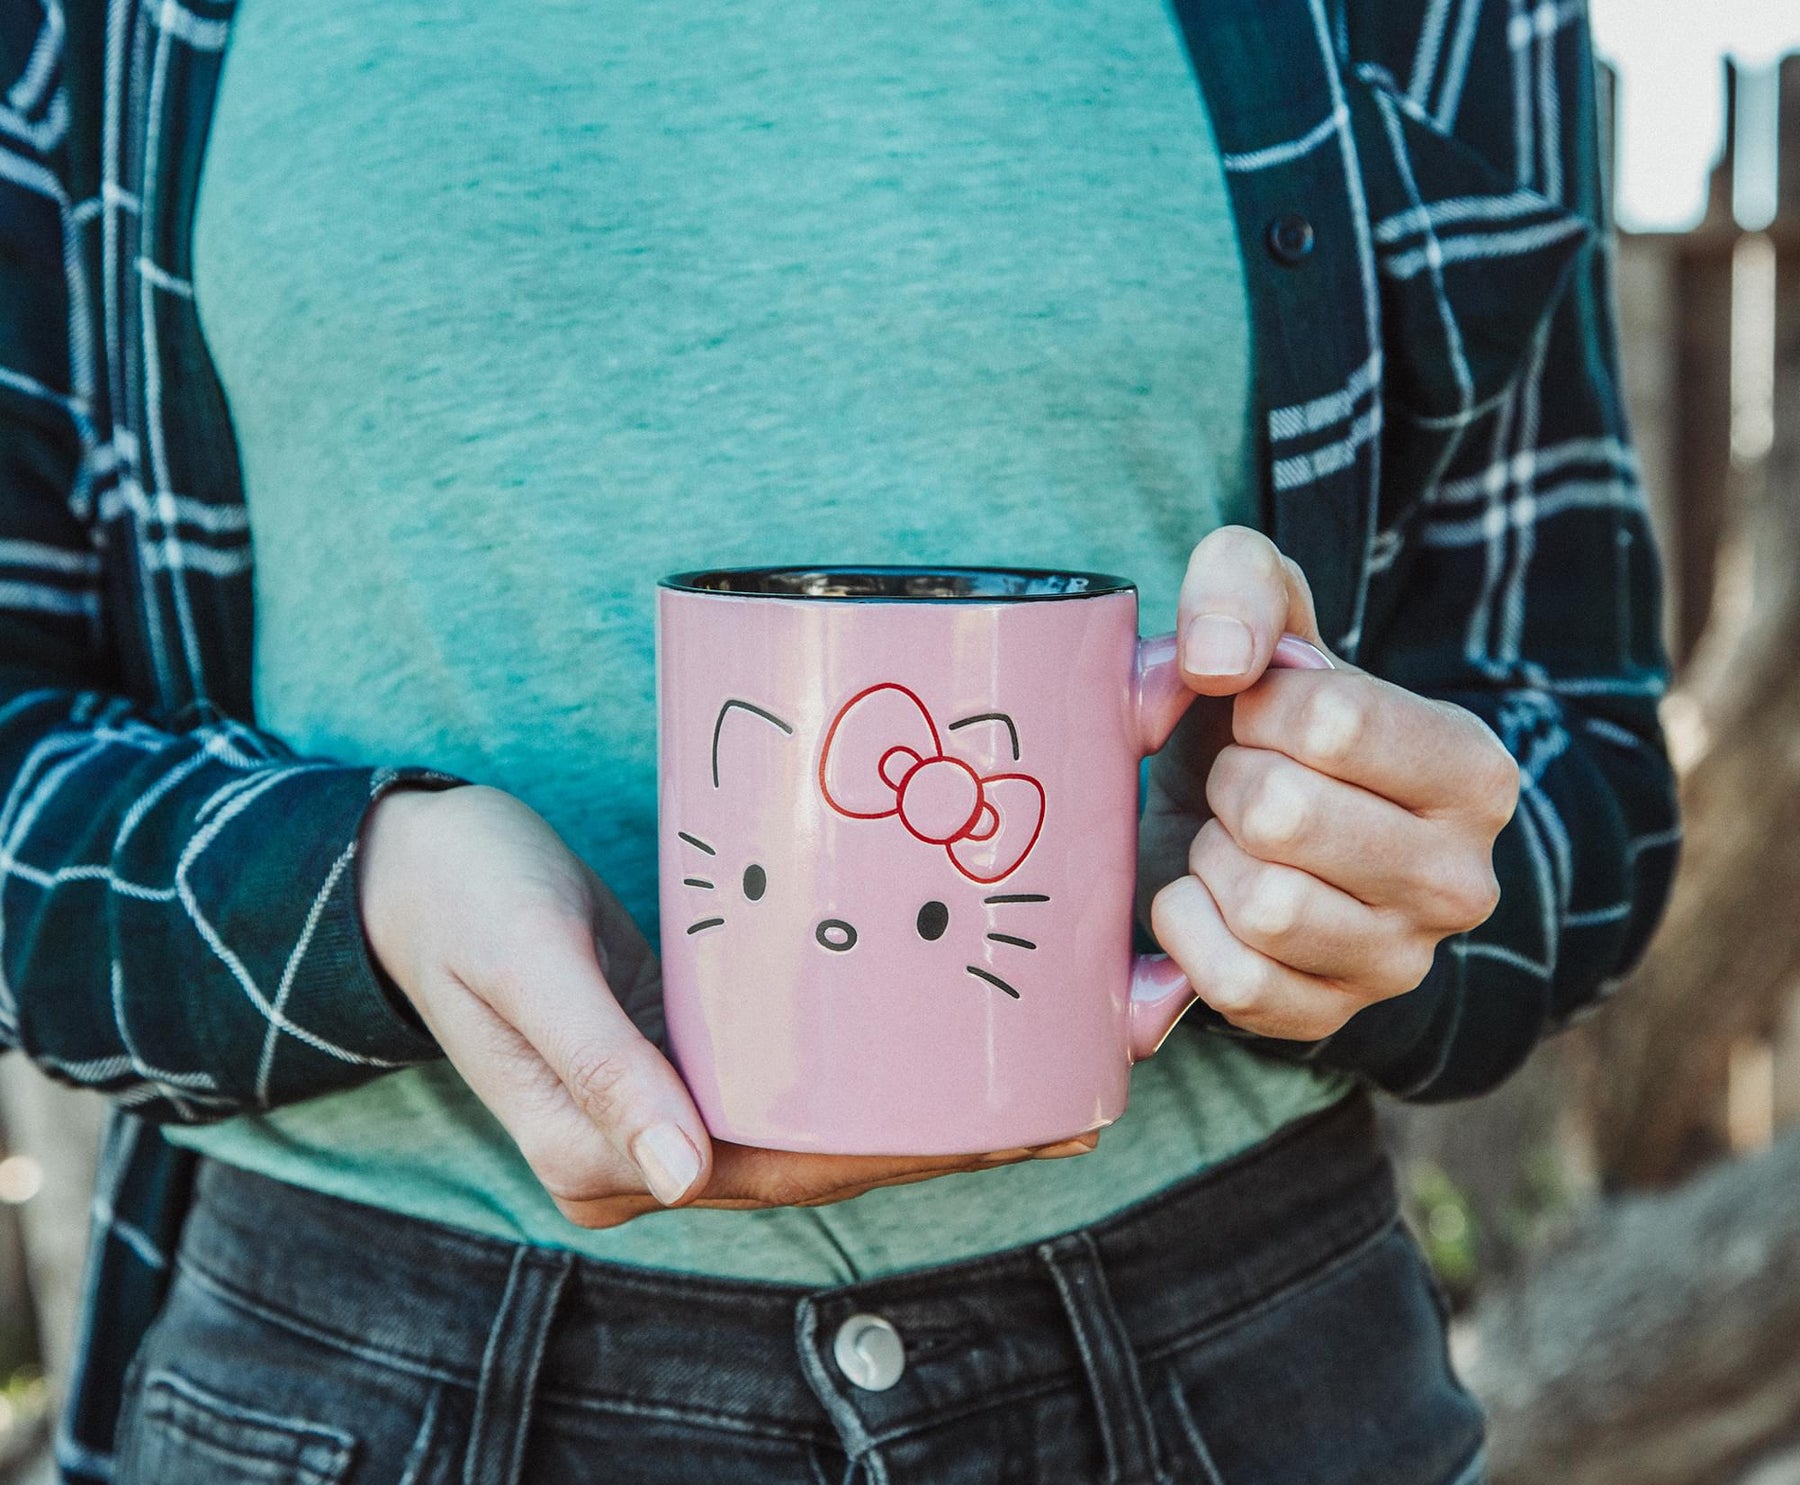 Sanrio Hello Kitty Pink Outline Face Wax Resist Ceramic Mug | Holds 14 Ounces